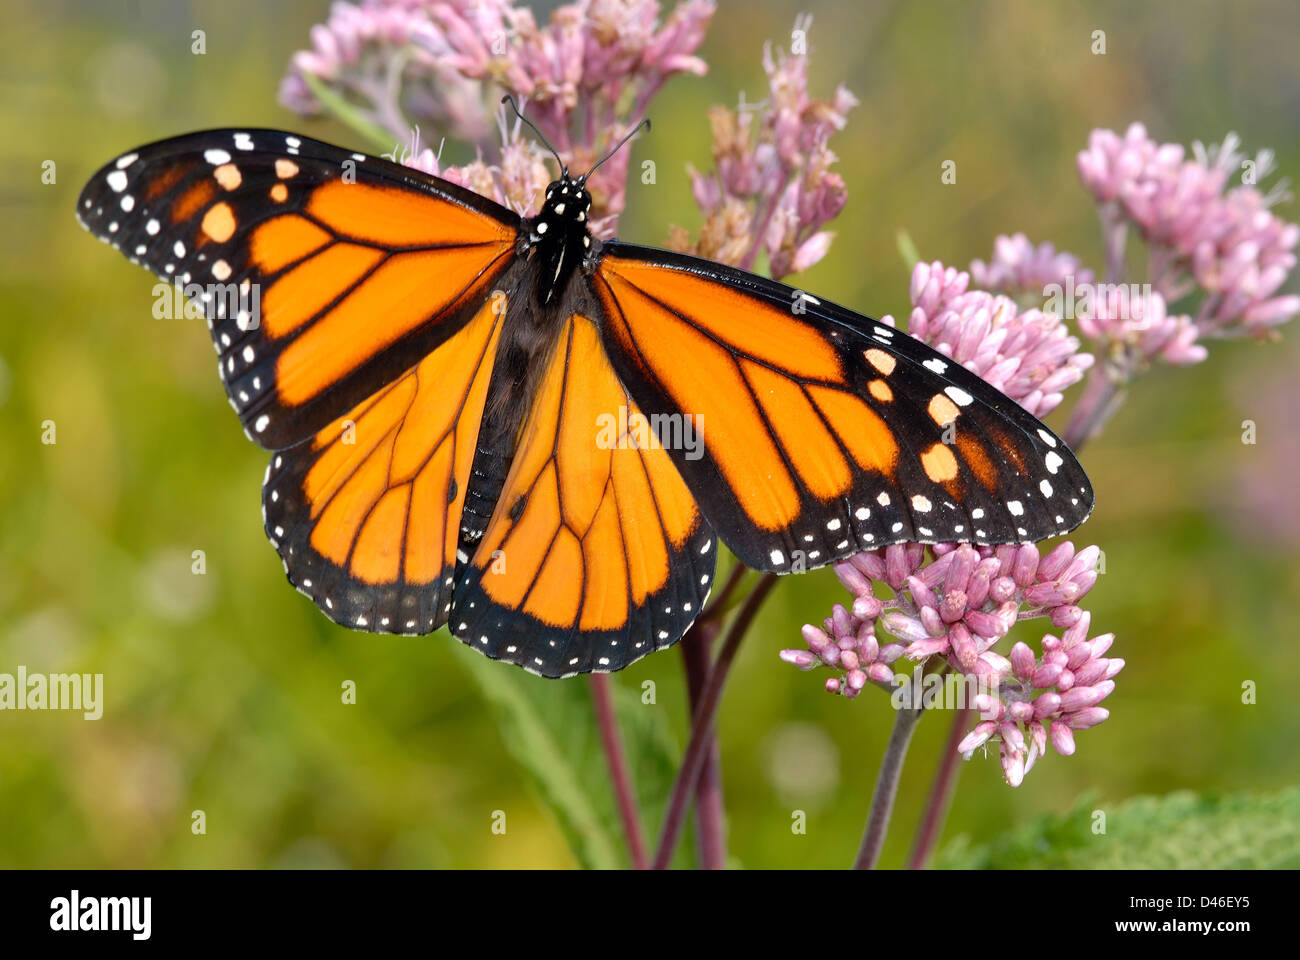 Monarch butterfly on flower Stock Photo